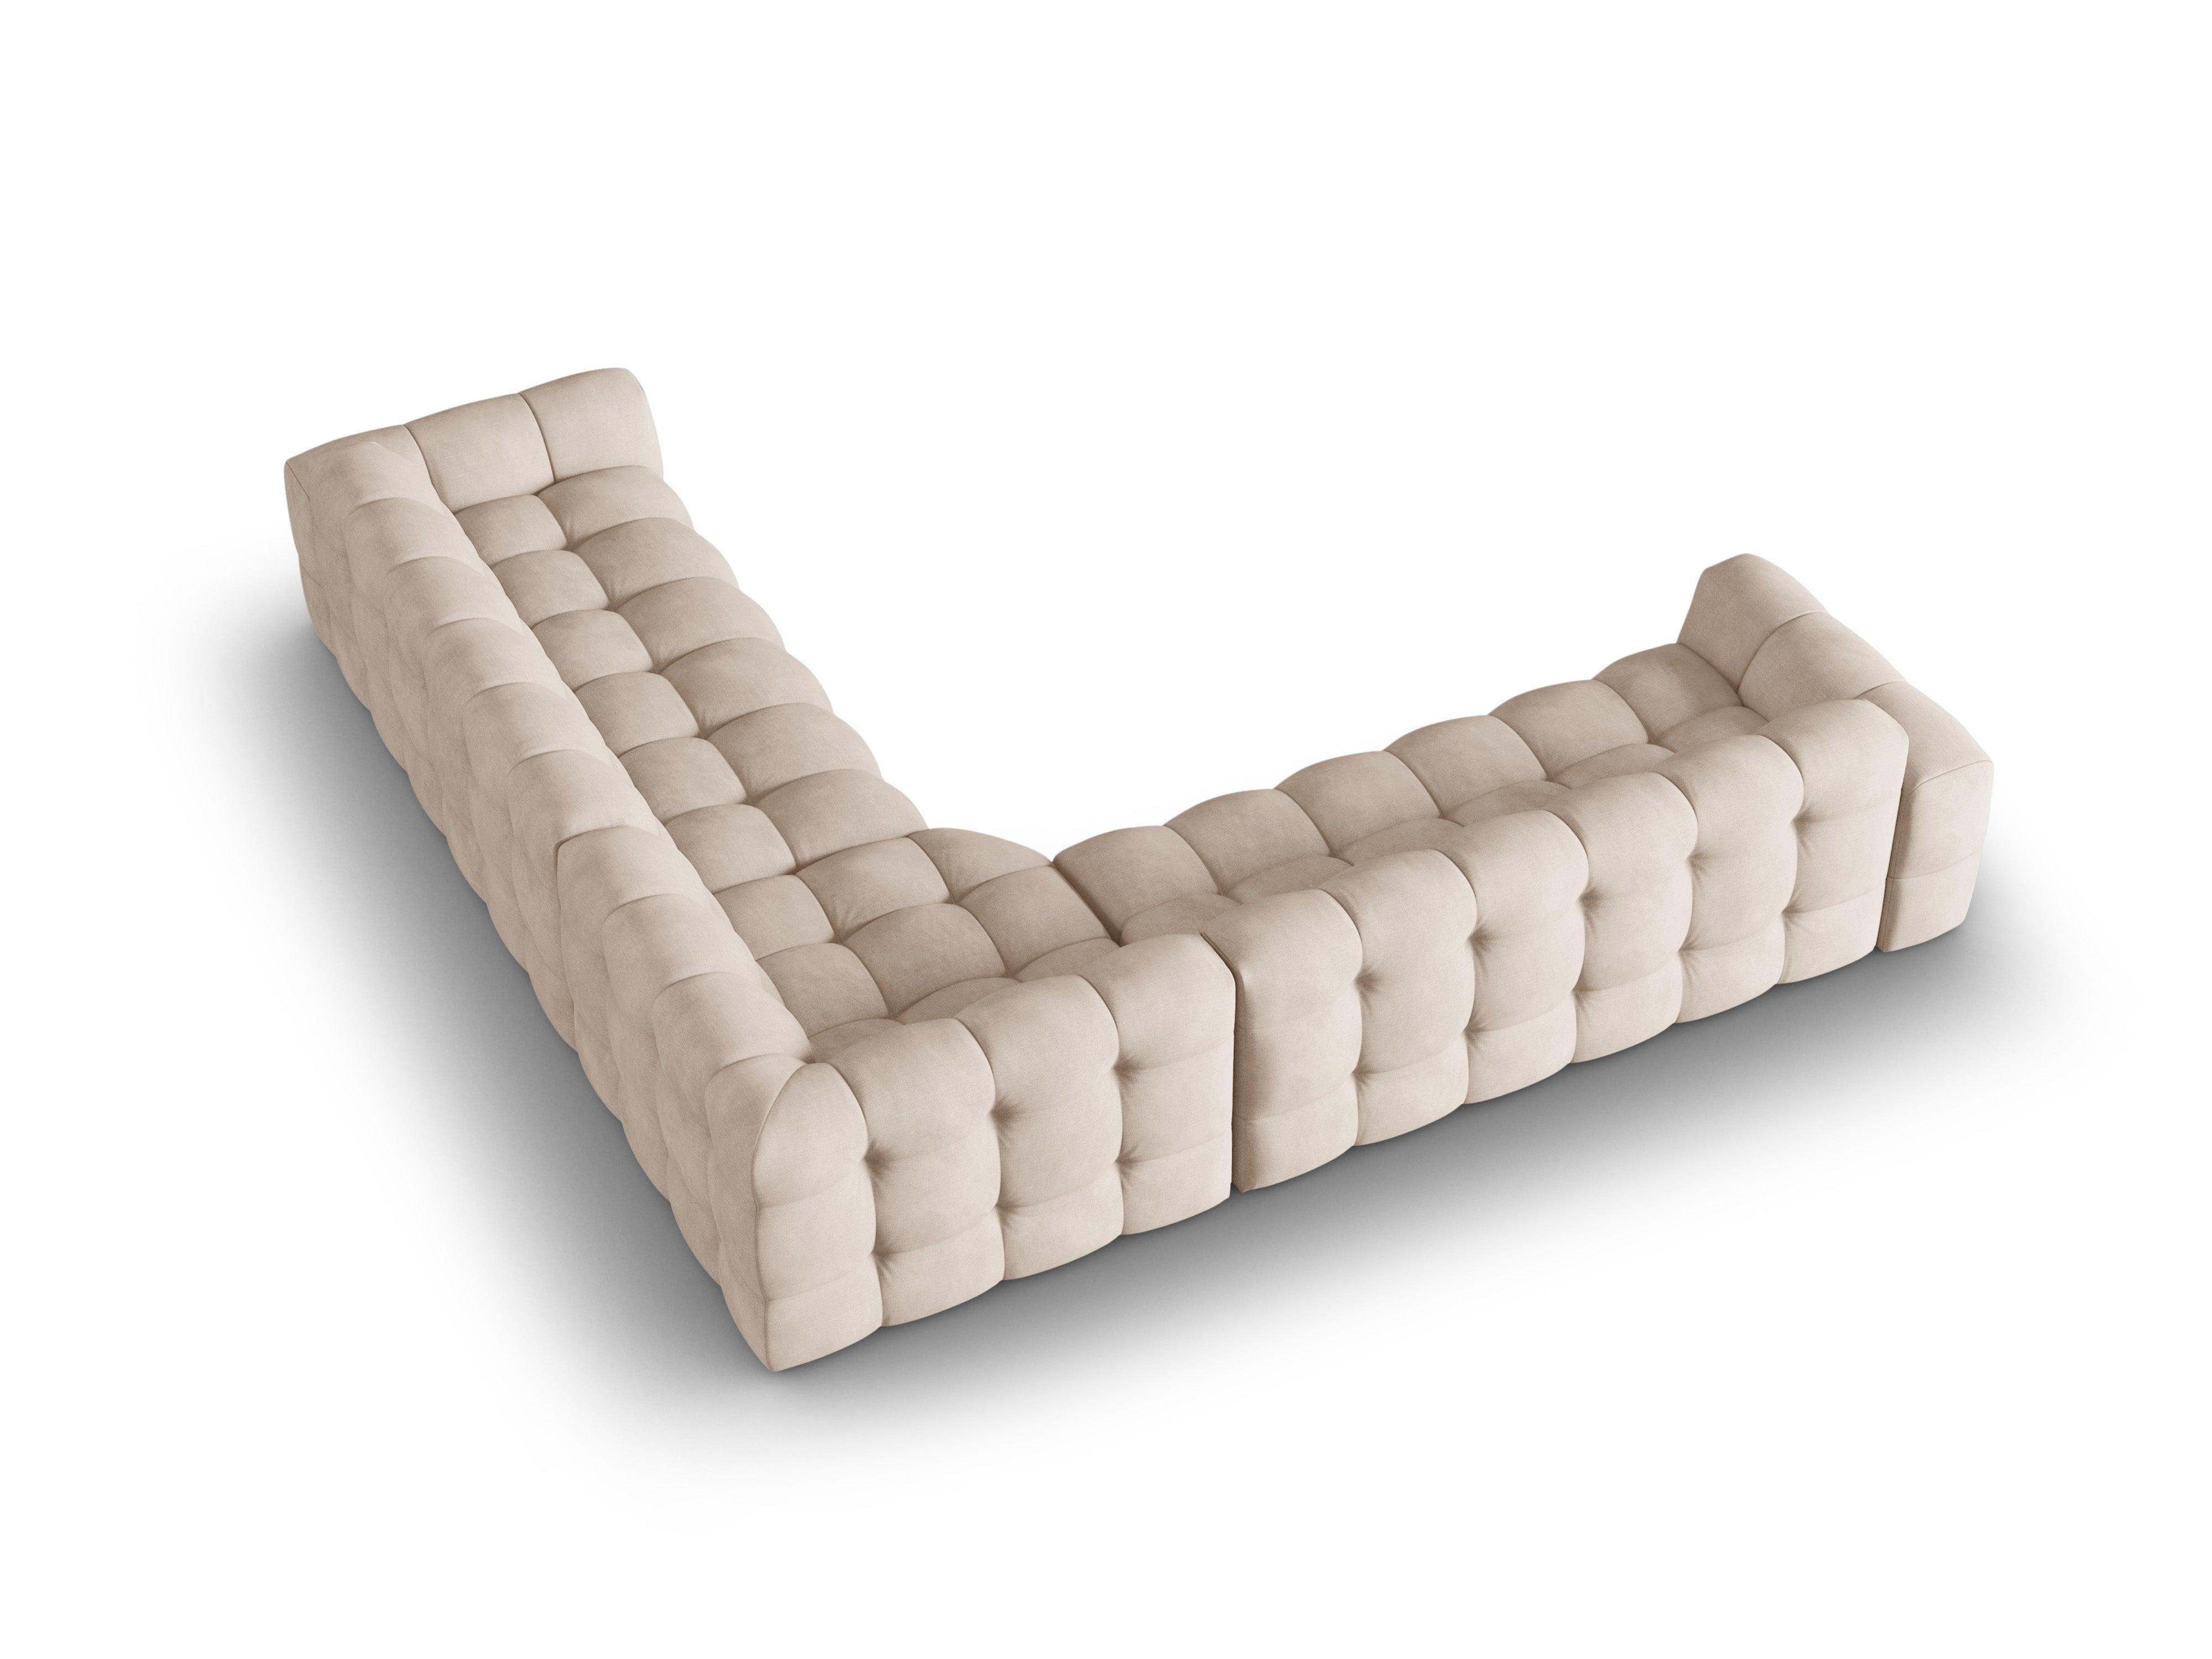 Symmetrical Corner Sofa, "Nino", 7 Seats, 322x322x68
Made in Europe, Maison Heritage, Eye on Design